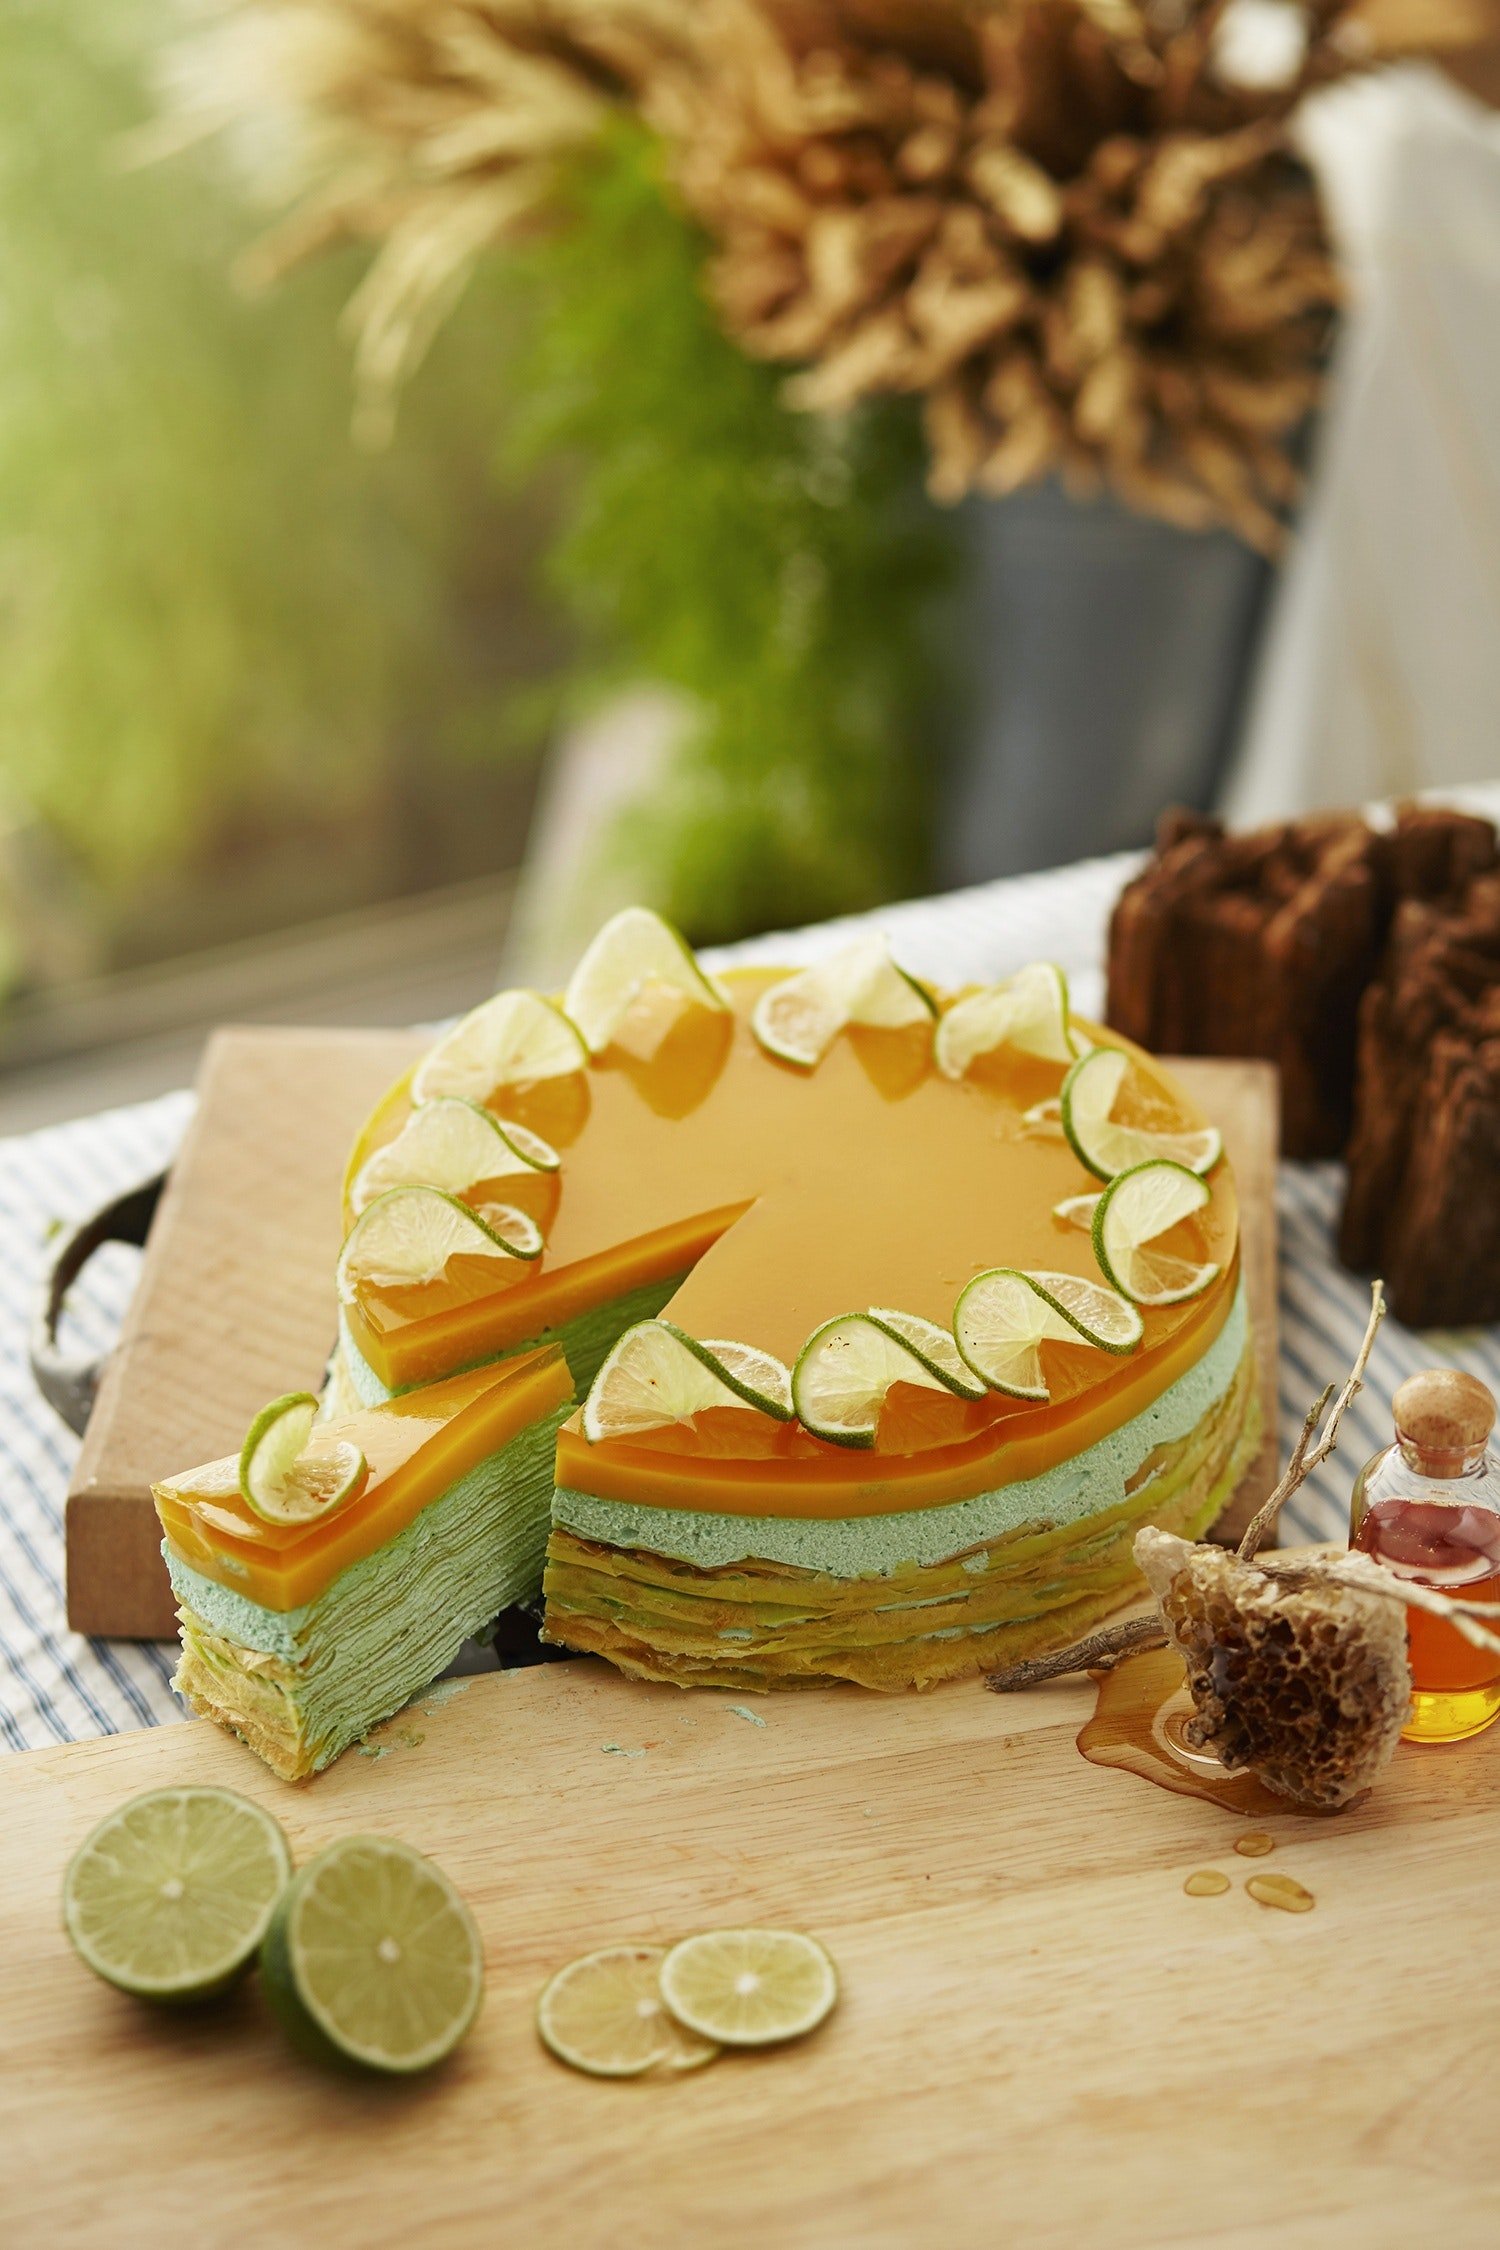 A picture of a lemon pudding cake | Photo: Pixabay